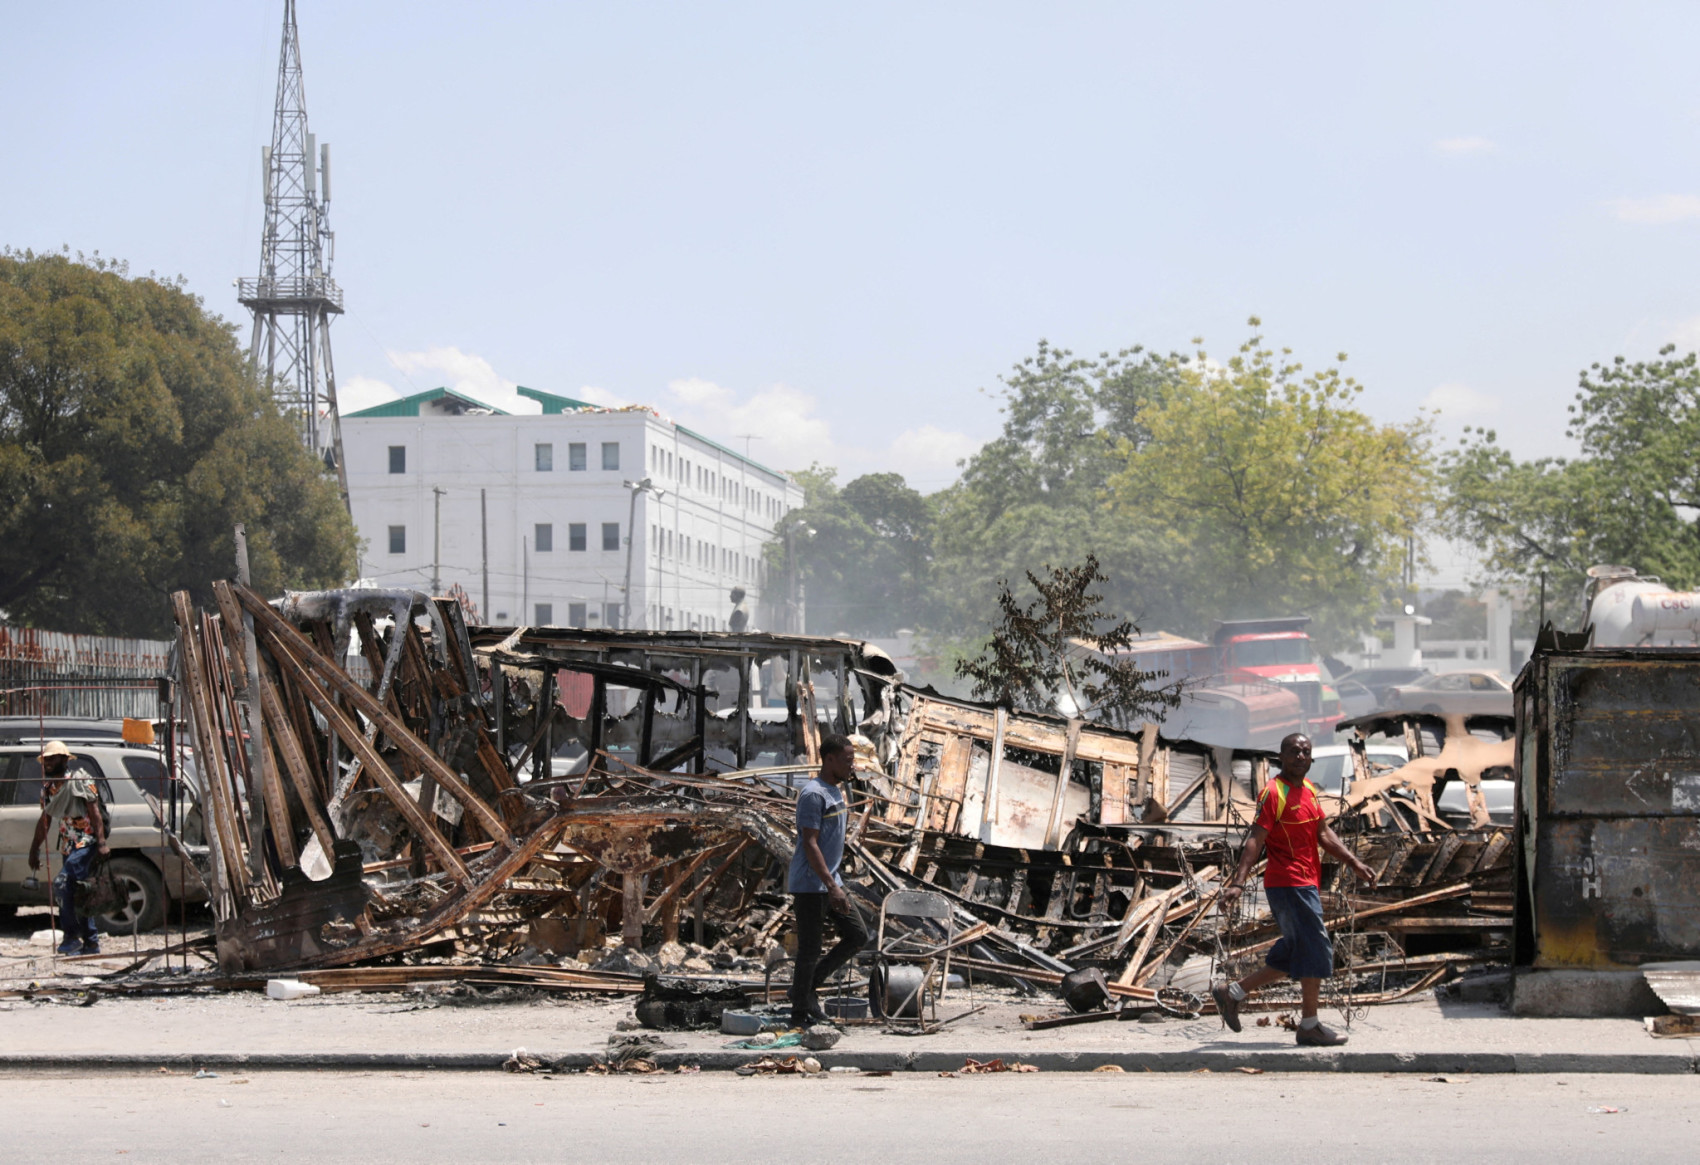 Haiti's death toll rises as international support lags, U.N. report says